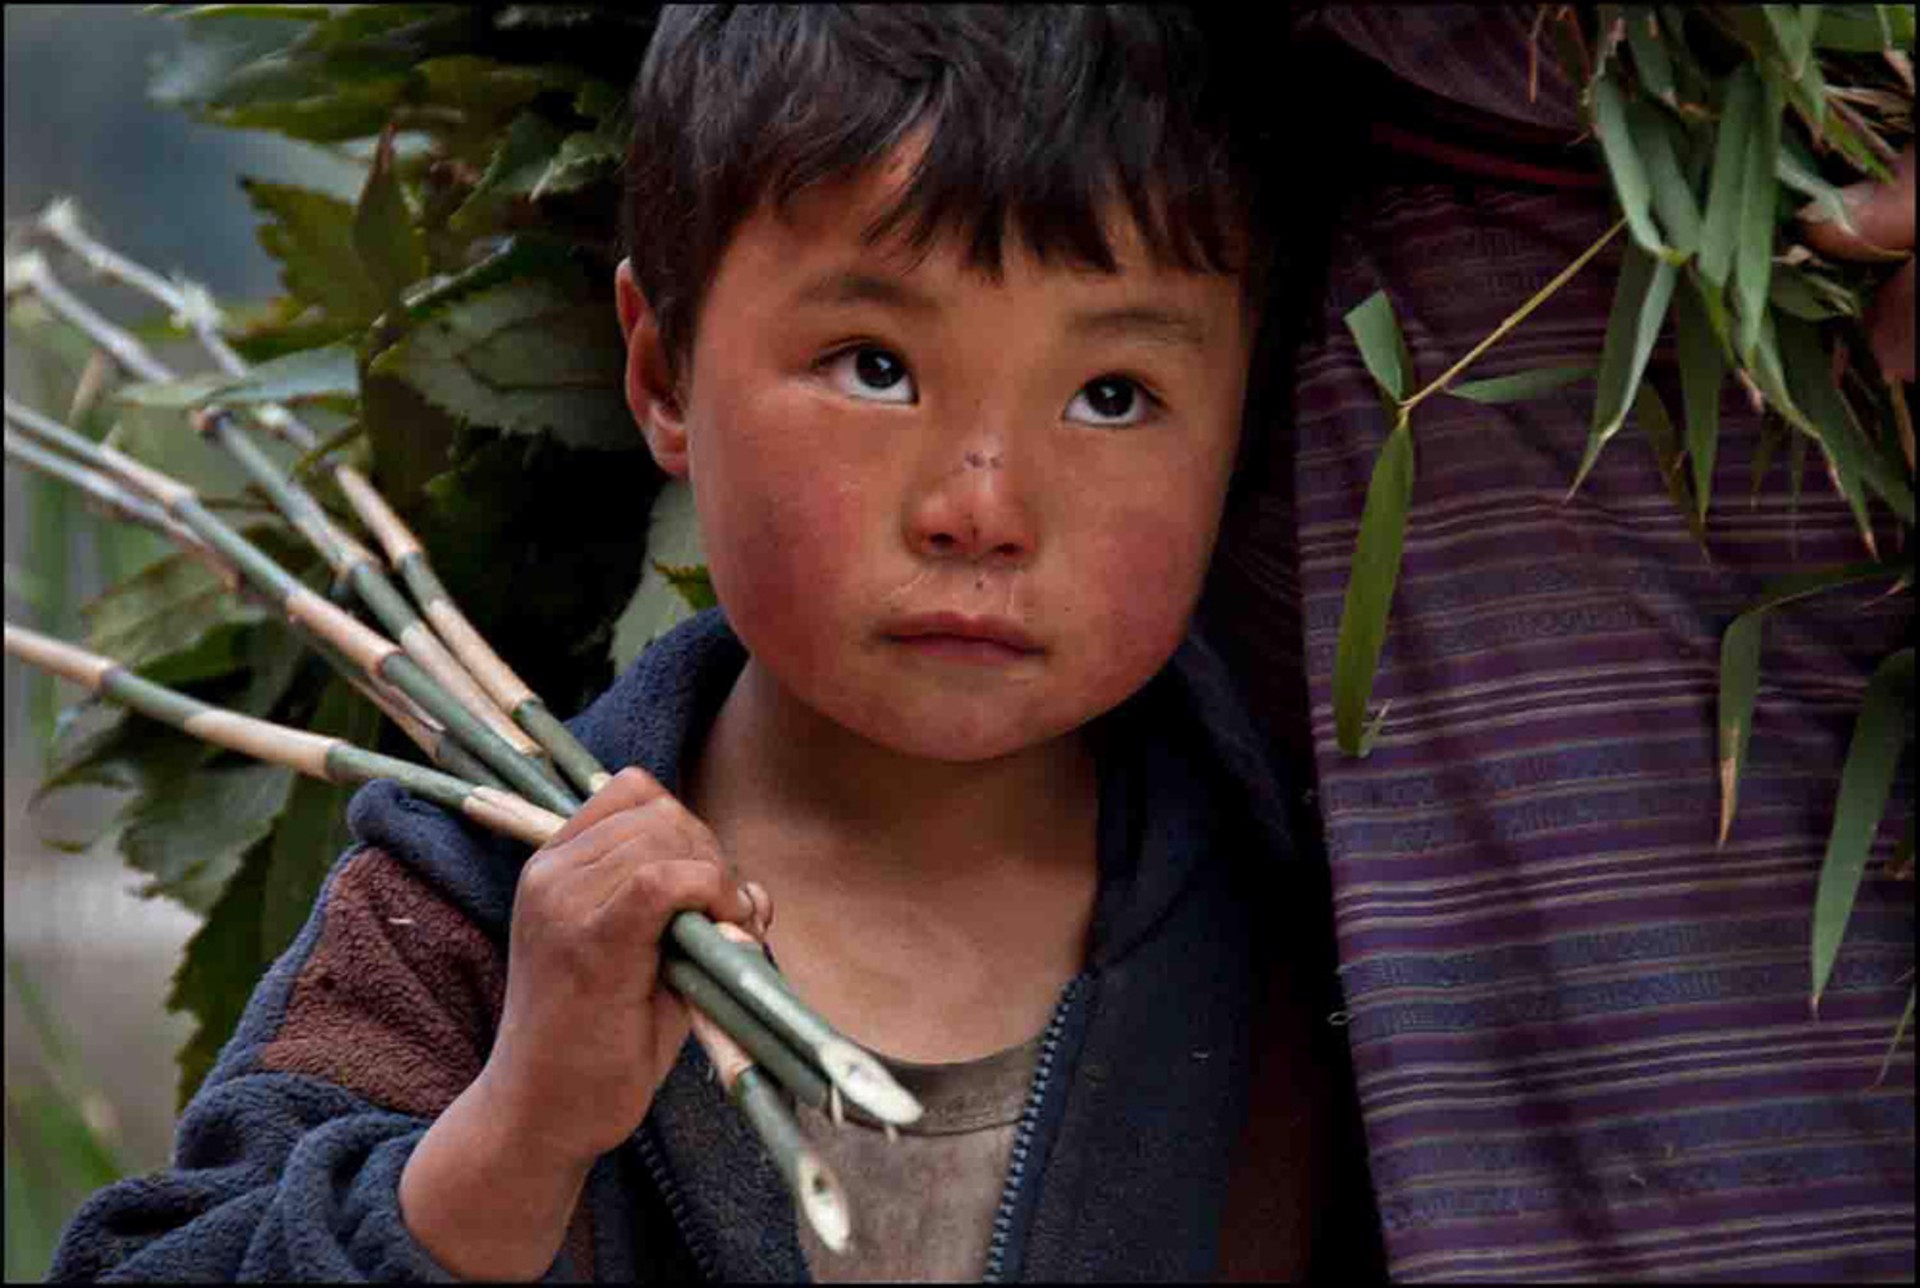 Bhutan Boy by Charles Porter